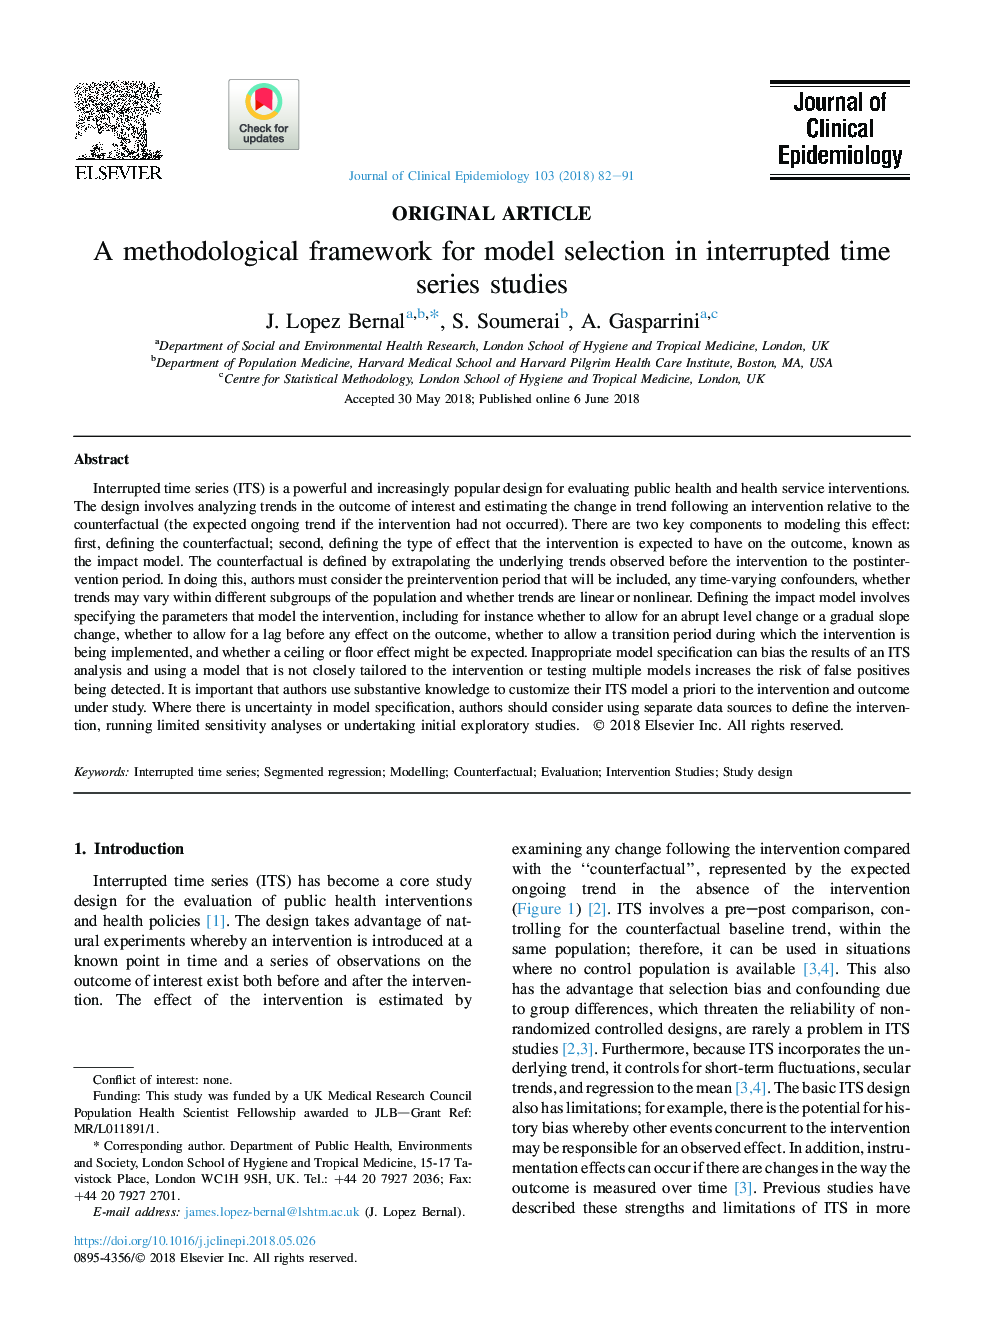 A methodological framework for model selection in interrupted time series studies